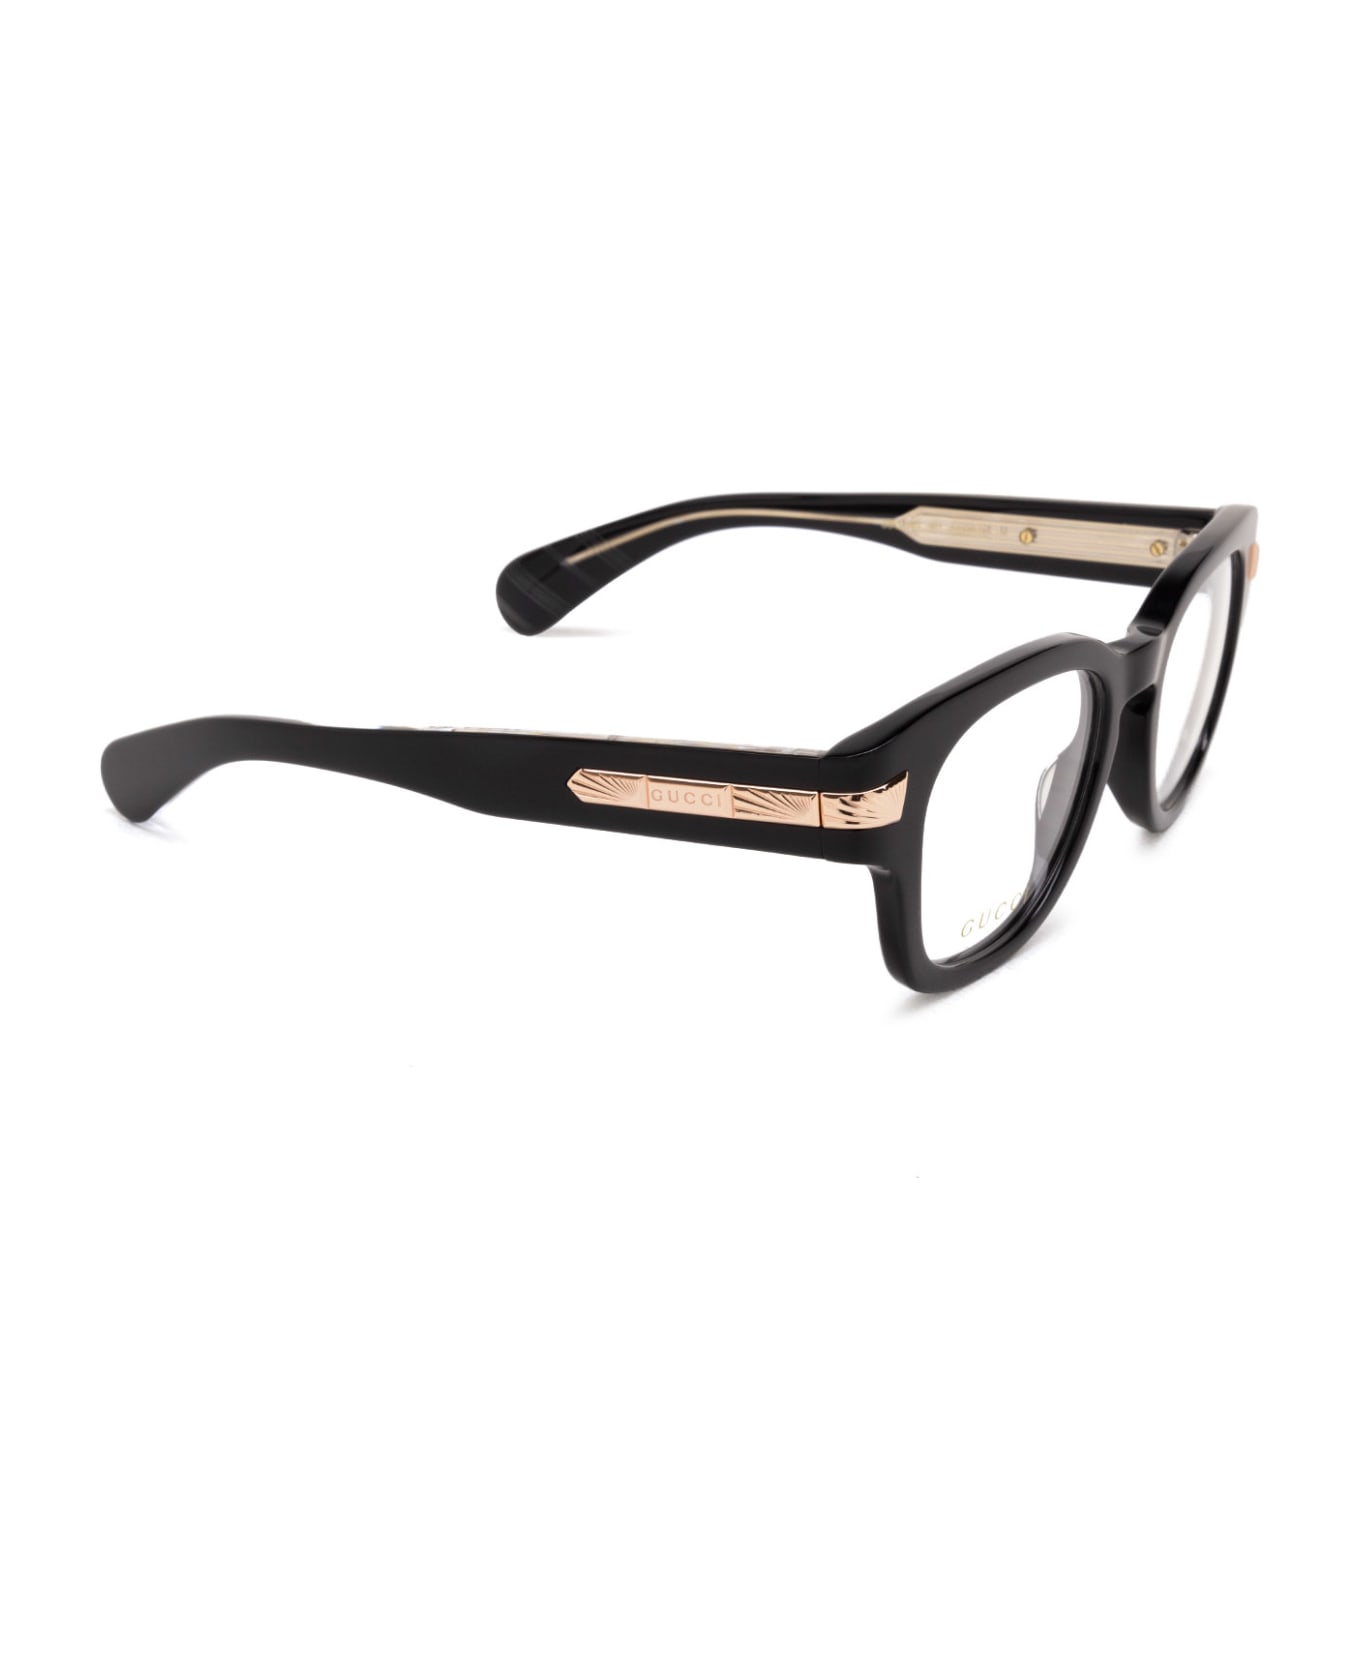 Gucci Eyewear Gg1518o Black Glasses - Black アイウェア